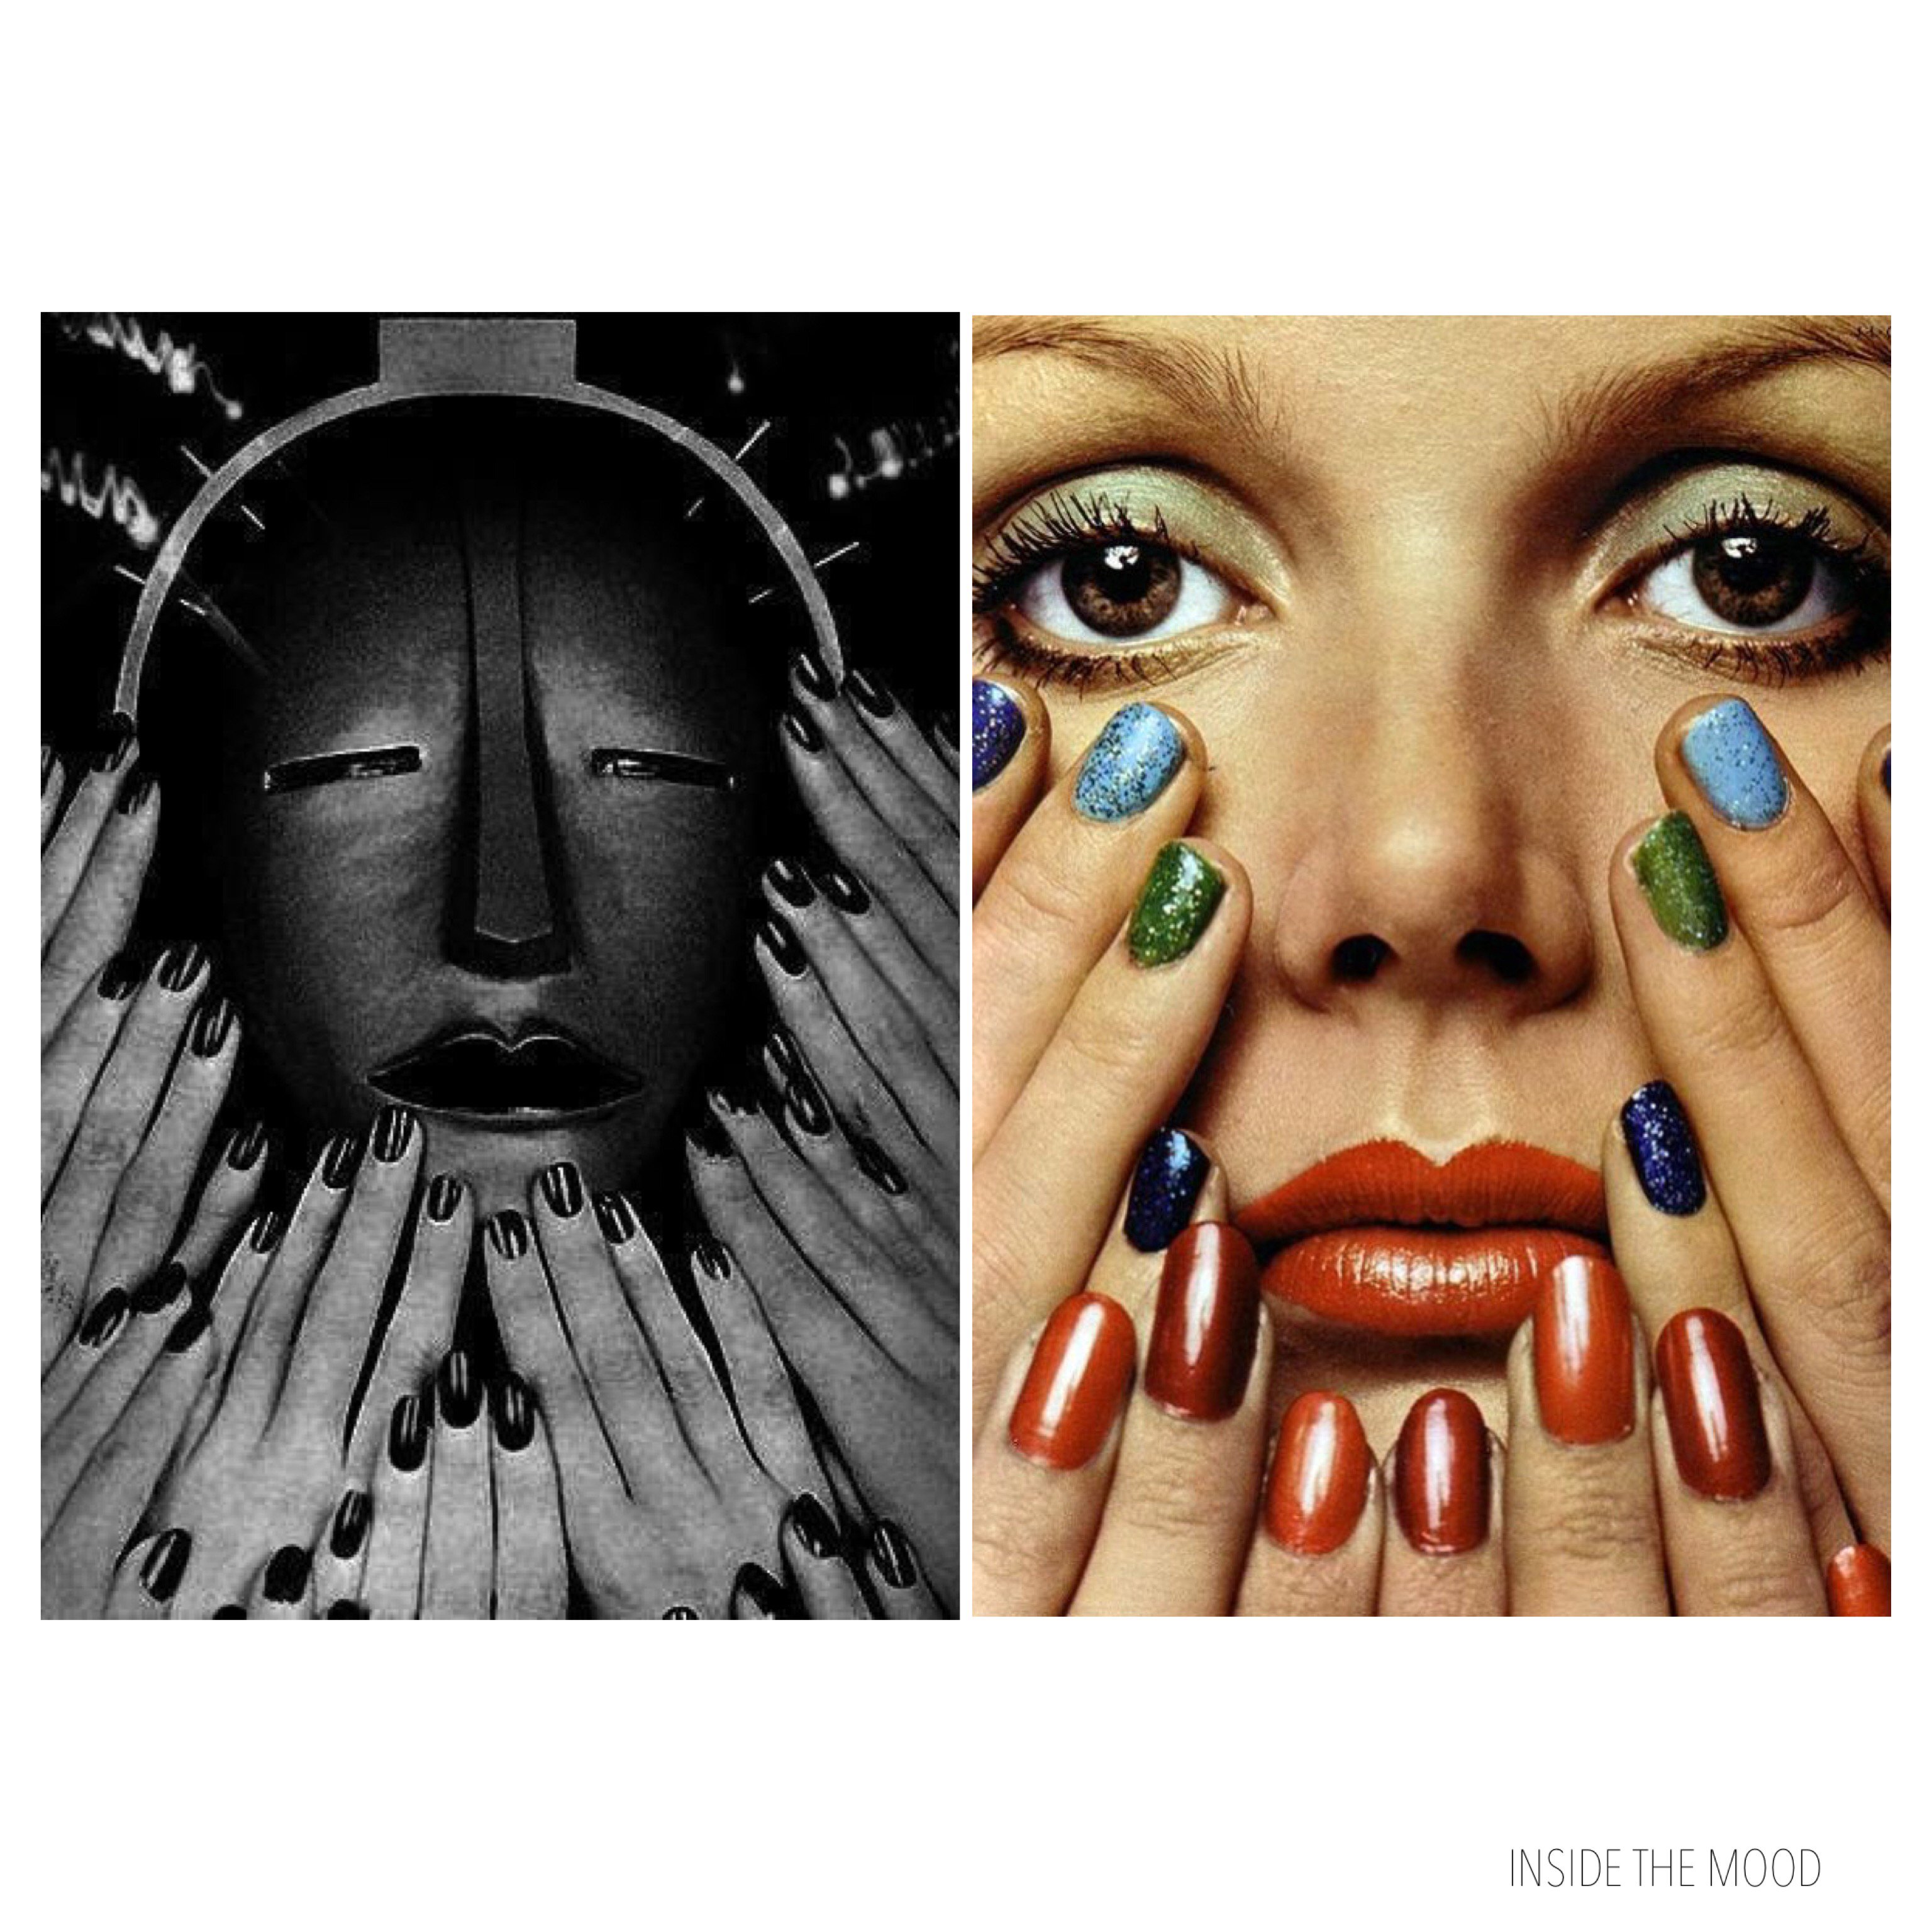 Inside the mood on Twitter: "FROM A PHOTO: Man Ray “Elizabeth Arden electrotherapy face mask”, 1932 || Catherine Deneuve photographed by Bourdin, L'Officiel 1974 #manray #guybourdin #lofficiel #photoinspiration #catherinedeneuve #nails ...